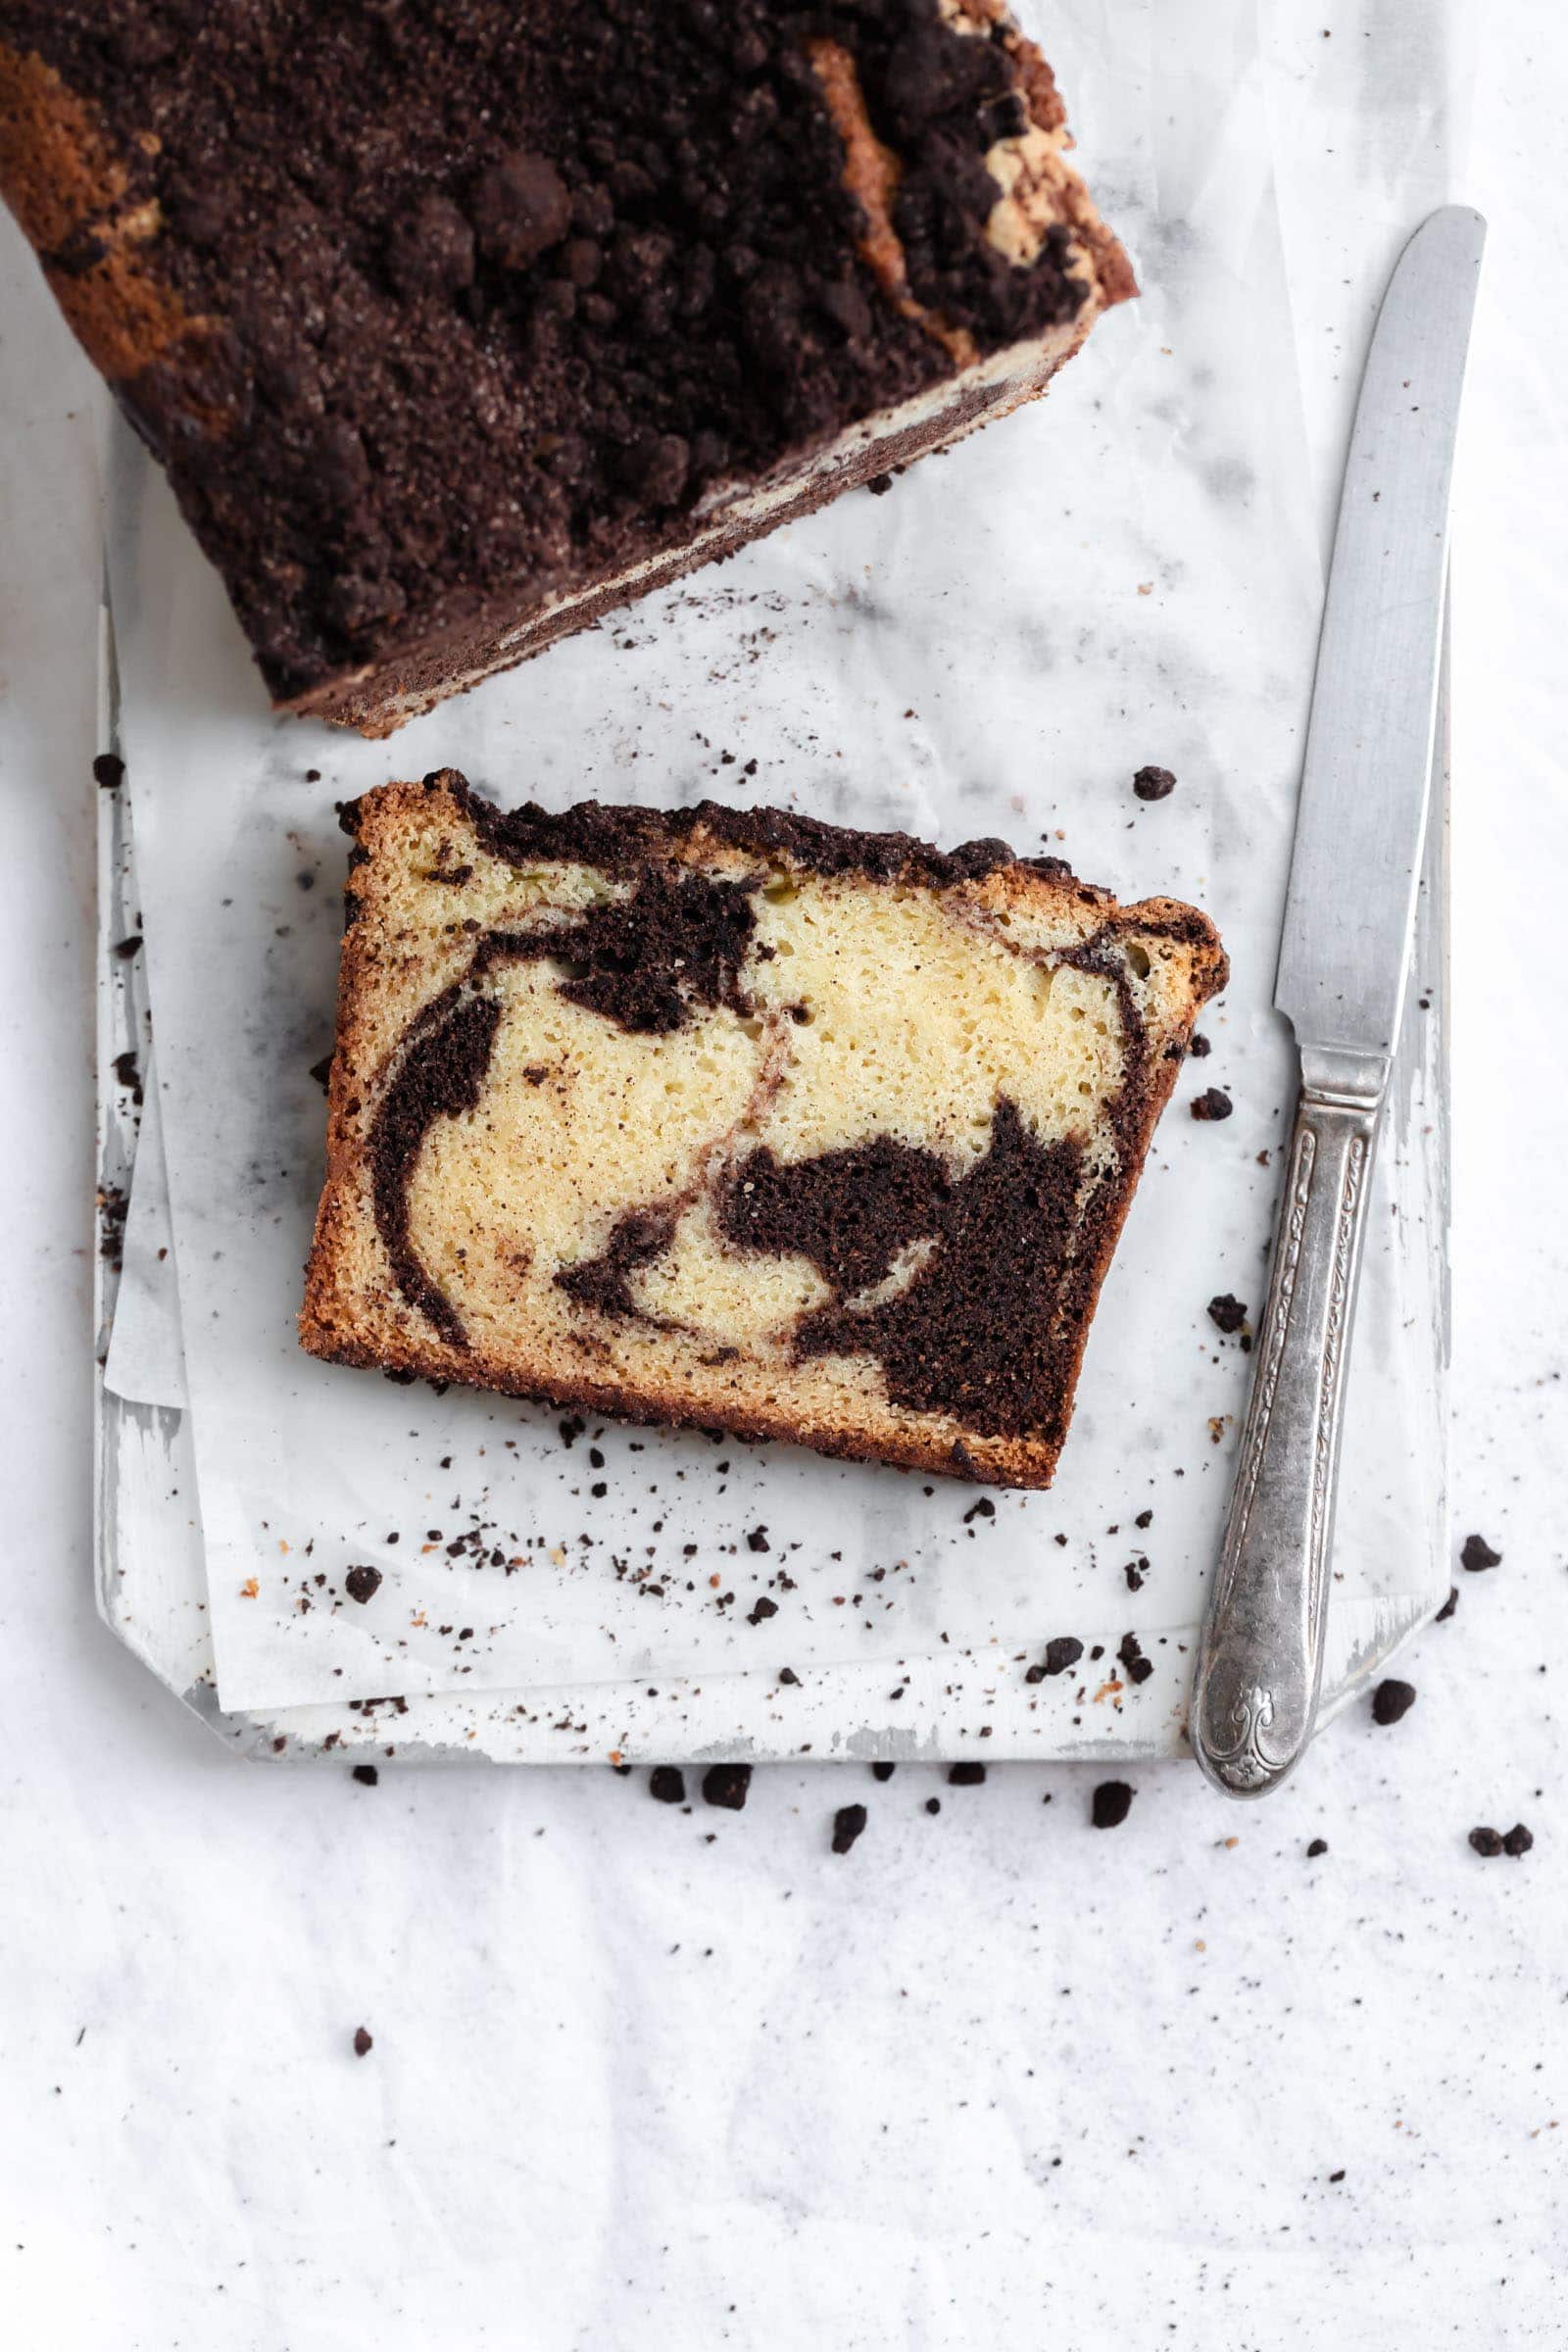 Buttermilk marble queen cake,# seasonal ingredient contest# Recipe by Linda  Akinyi - Cookpad